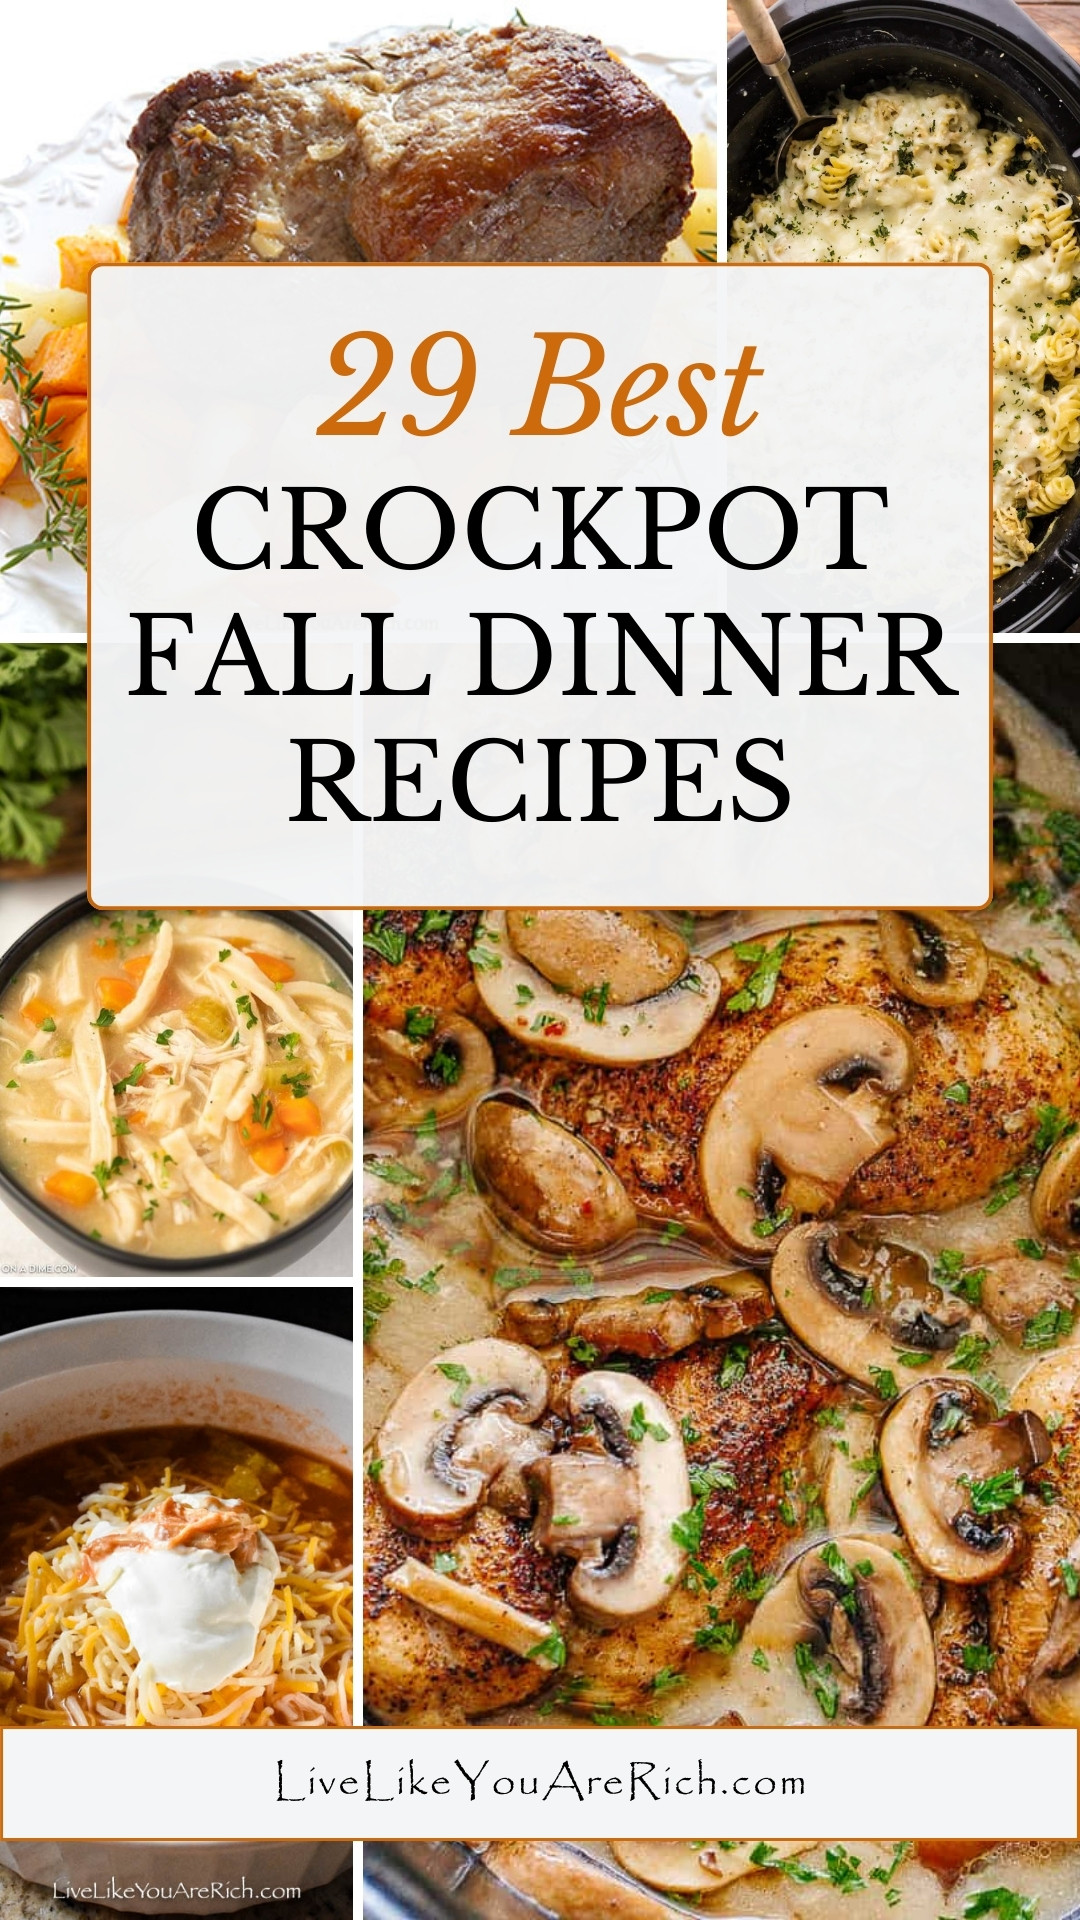 29 Best Crockpot Fall Dinner Recipes